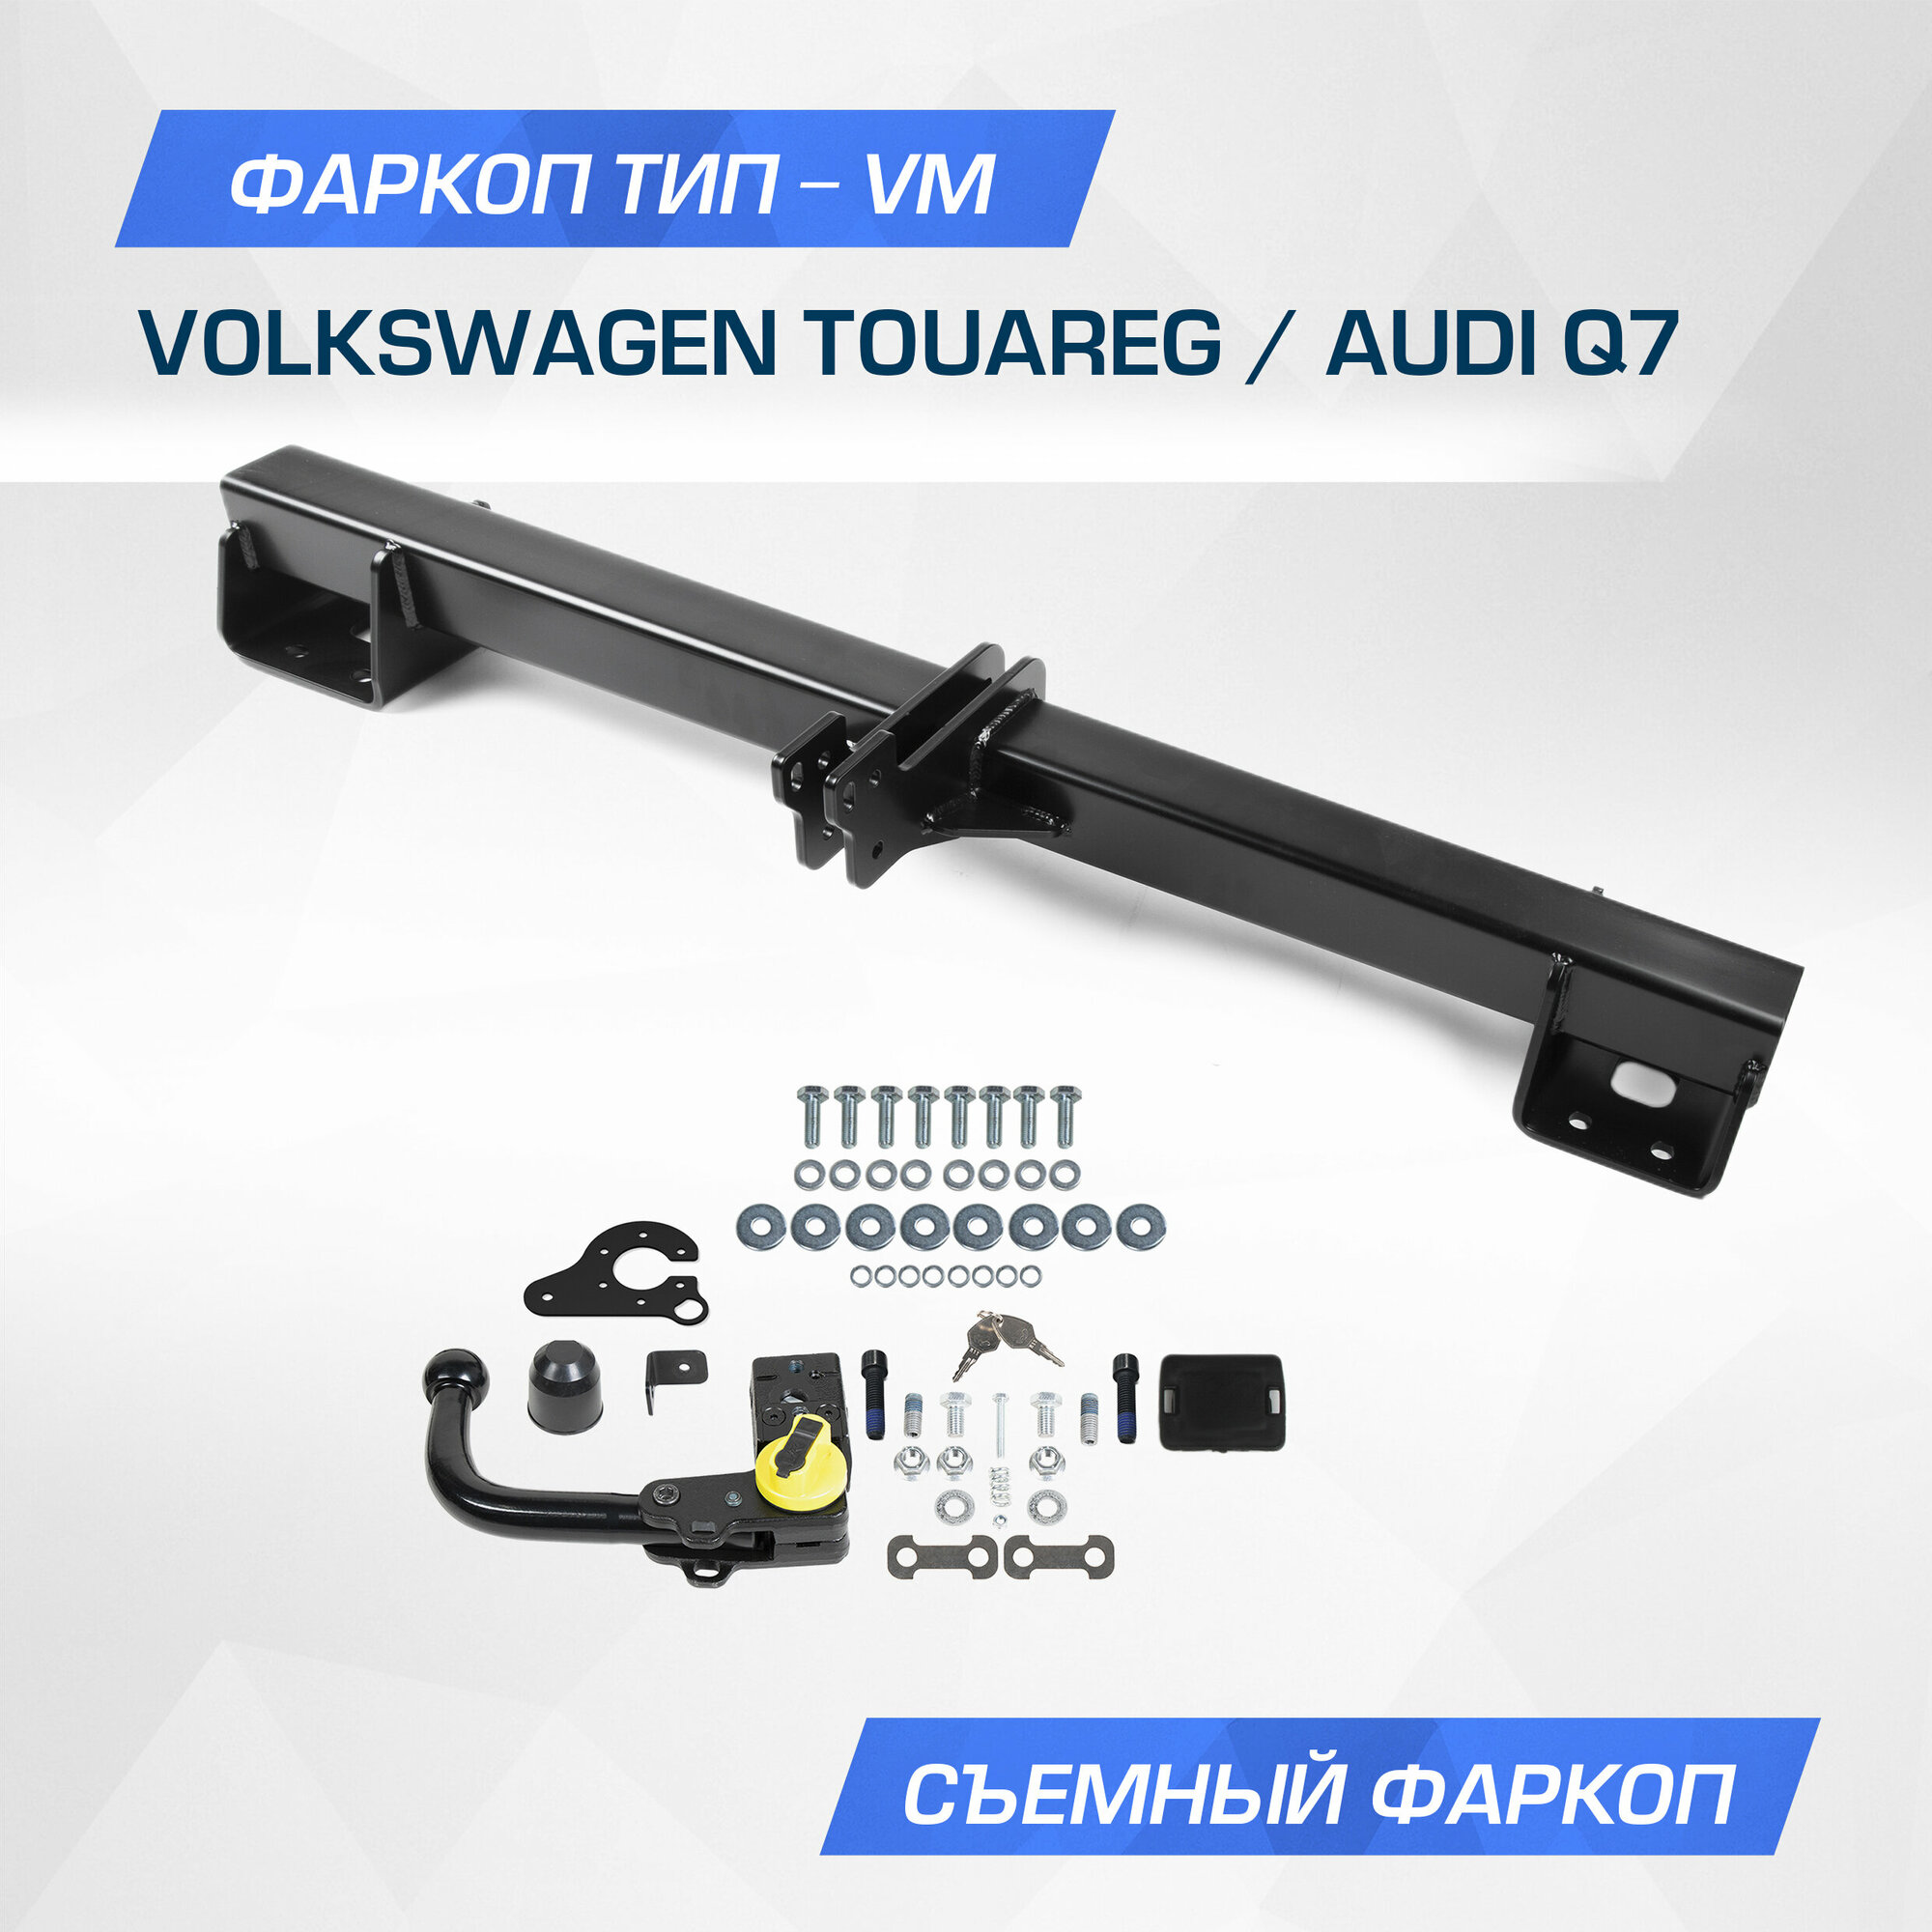 Фаркоп Berg для Volkswagen Touareg II поколение 2010-2018/Audi Q7 2006-2015 шар VM 3500/100 кг F.5813.003